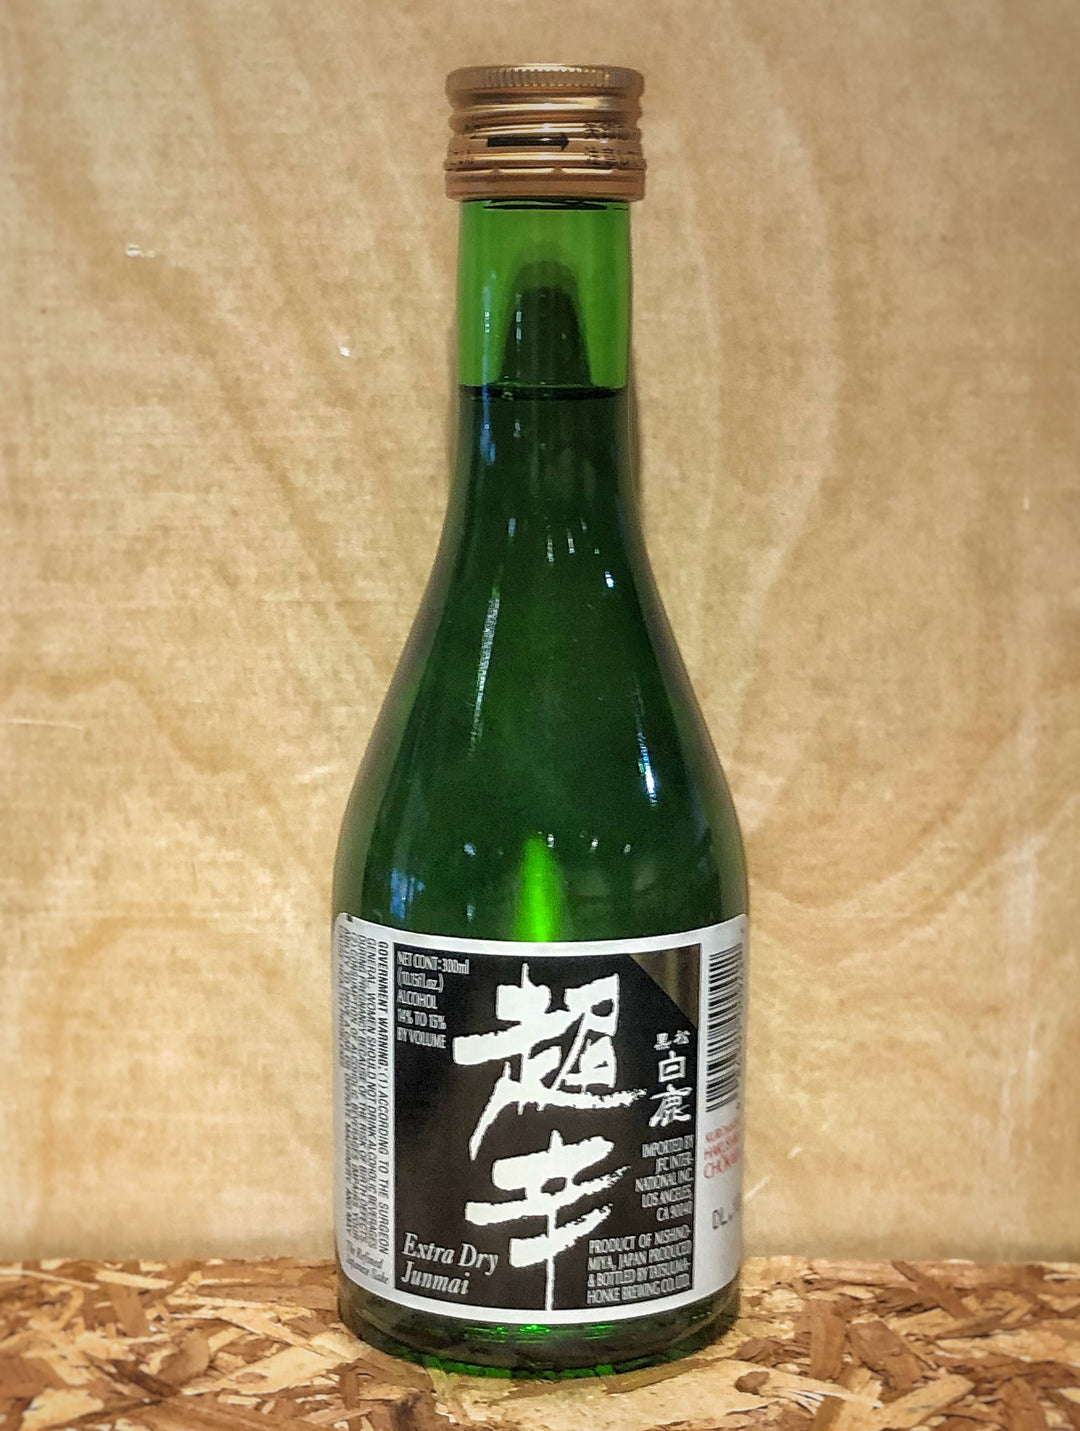 Ozeki Sake Dry 14.5% Vol - 750ml